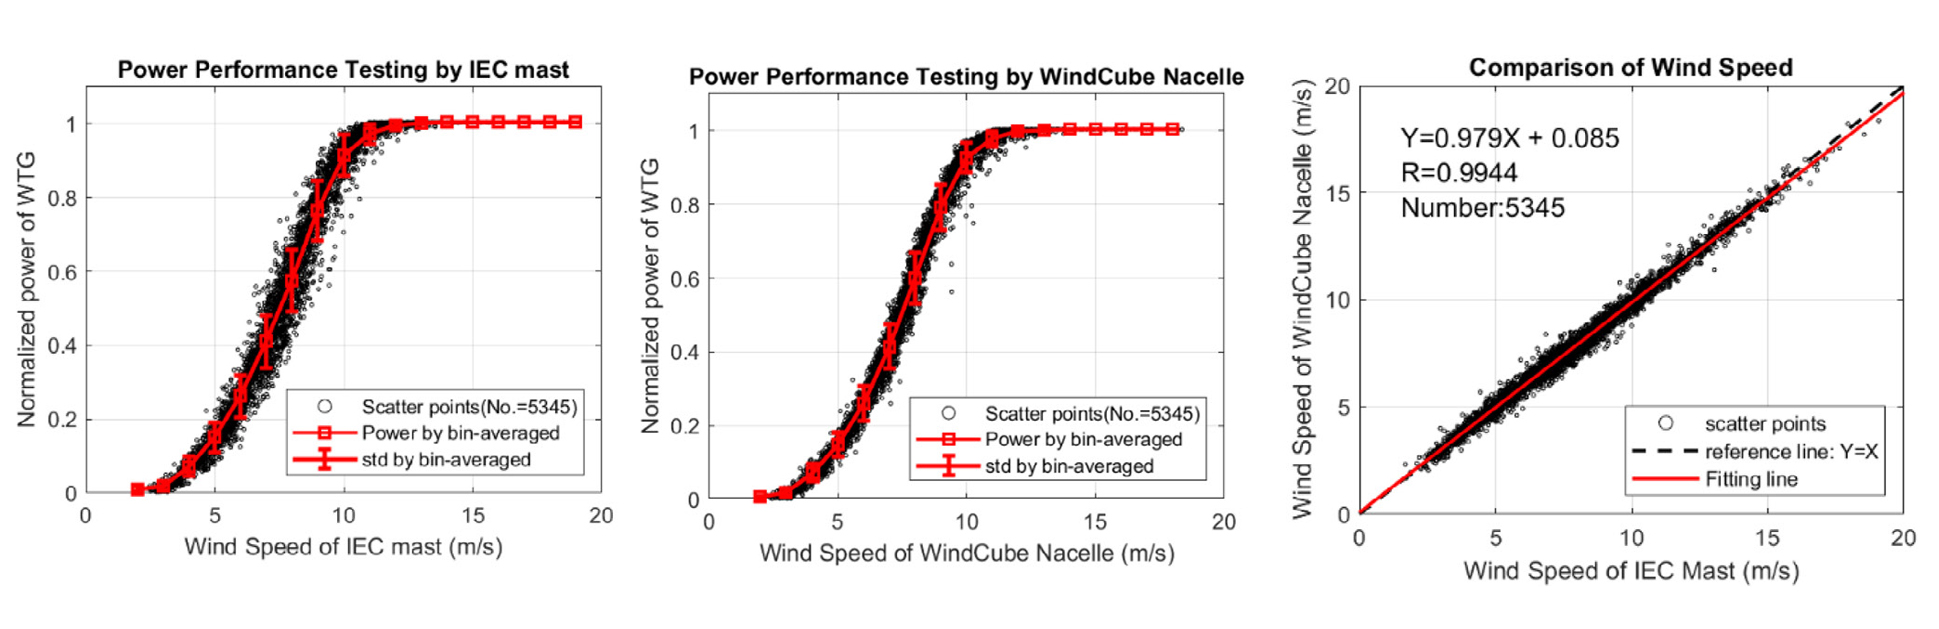 WindCube Nacelle Comparison charts